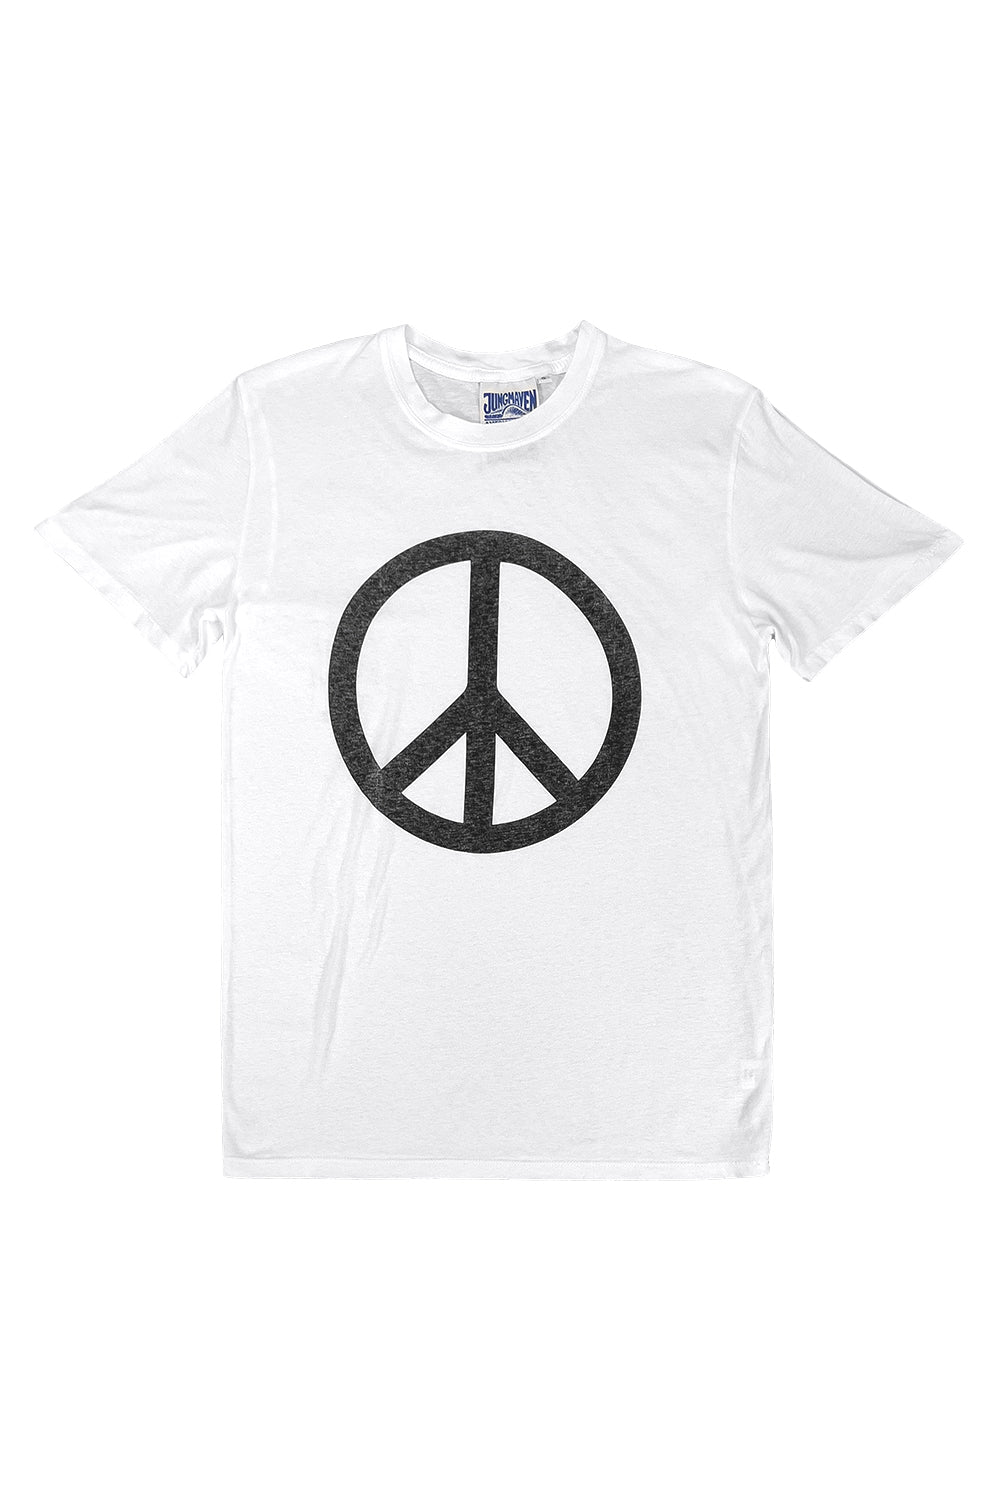 Peace Tee | Jungmaven Hemp Clothing & Accessories / White